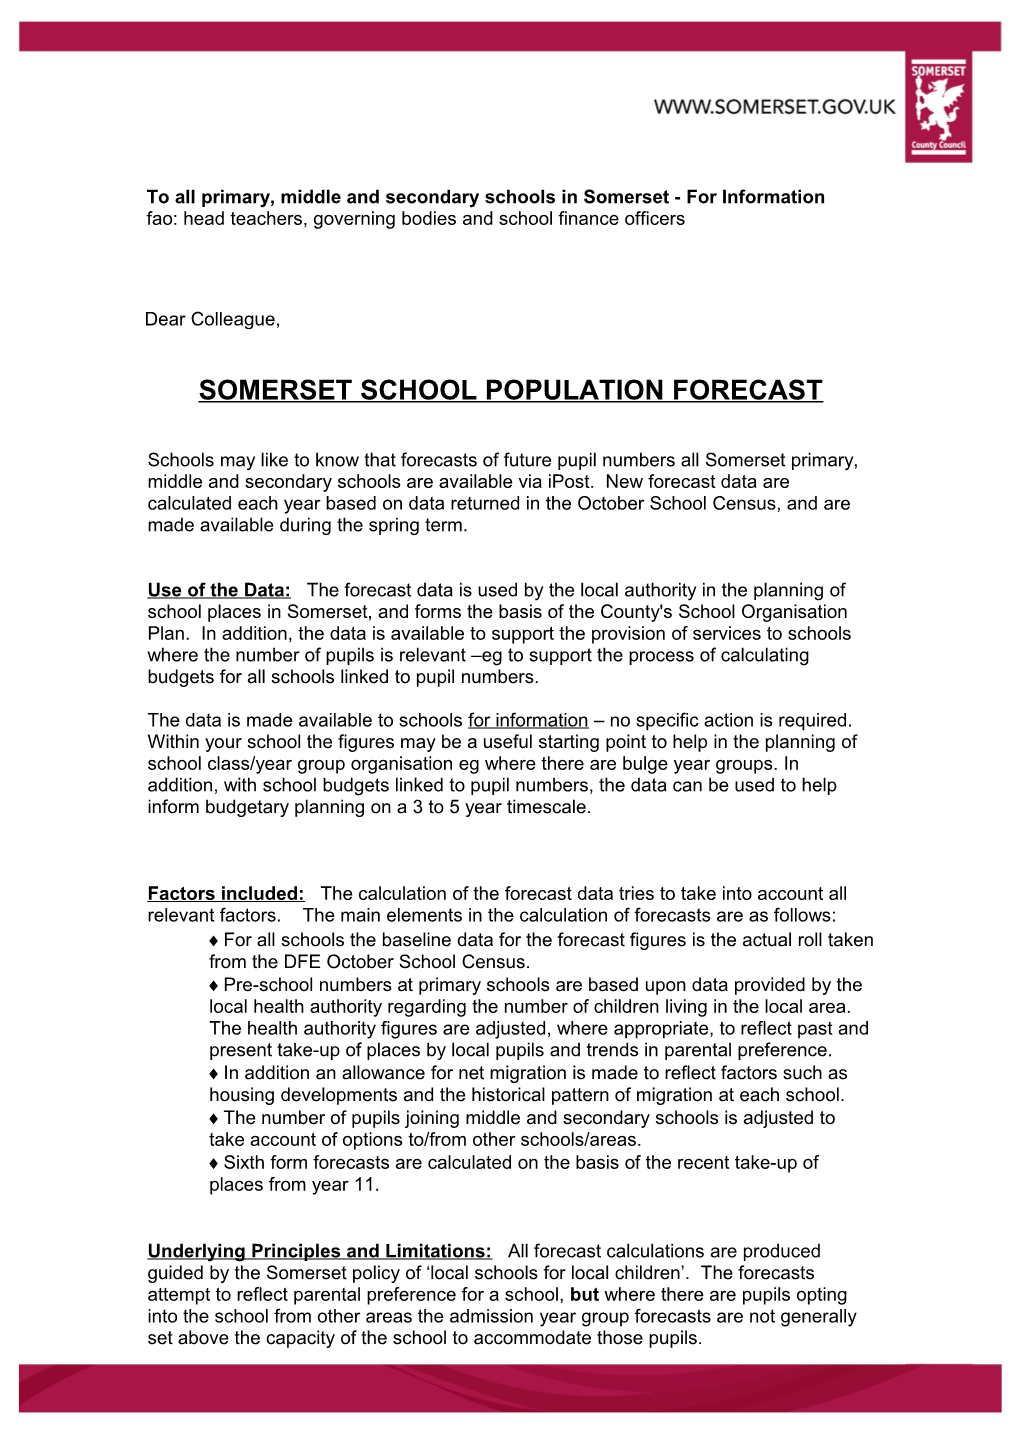 Somerset School Population Forecast